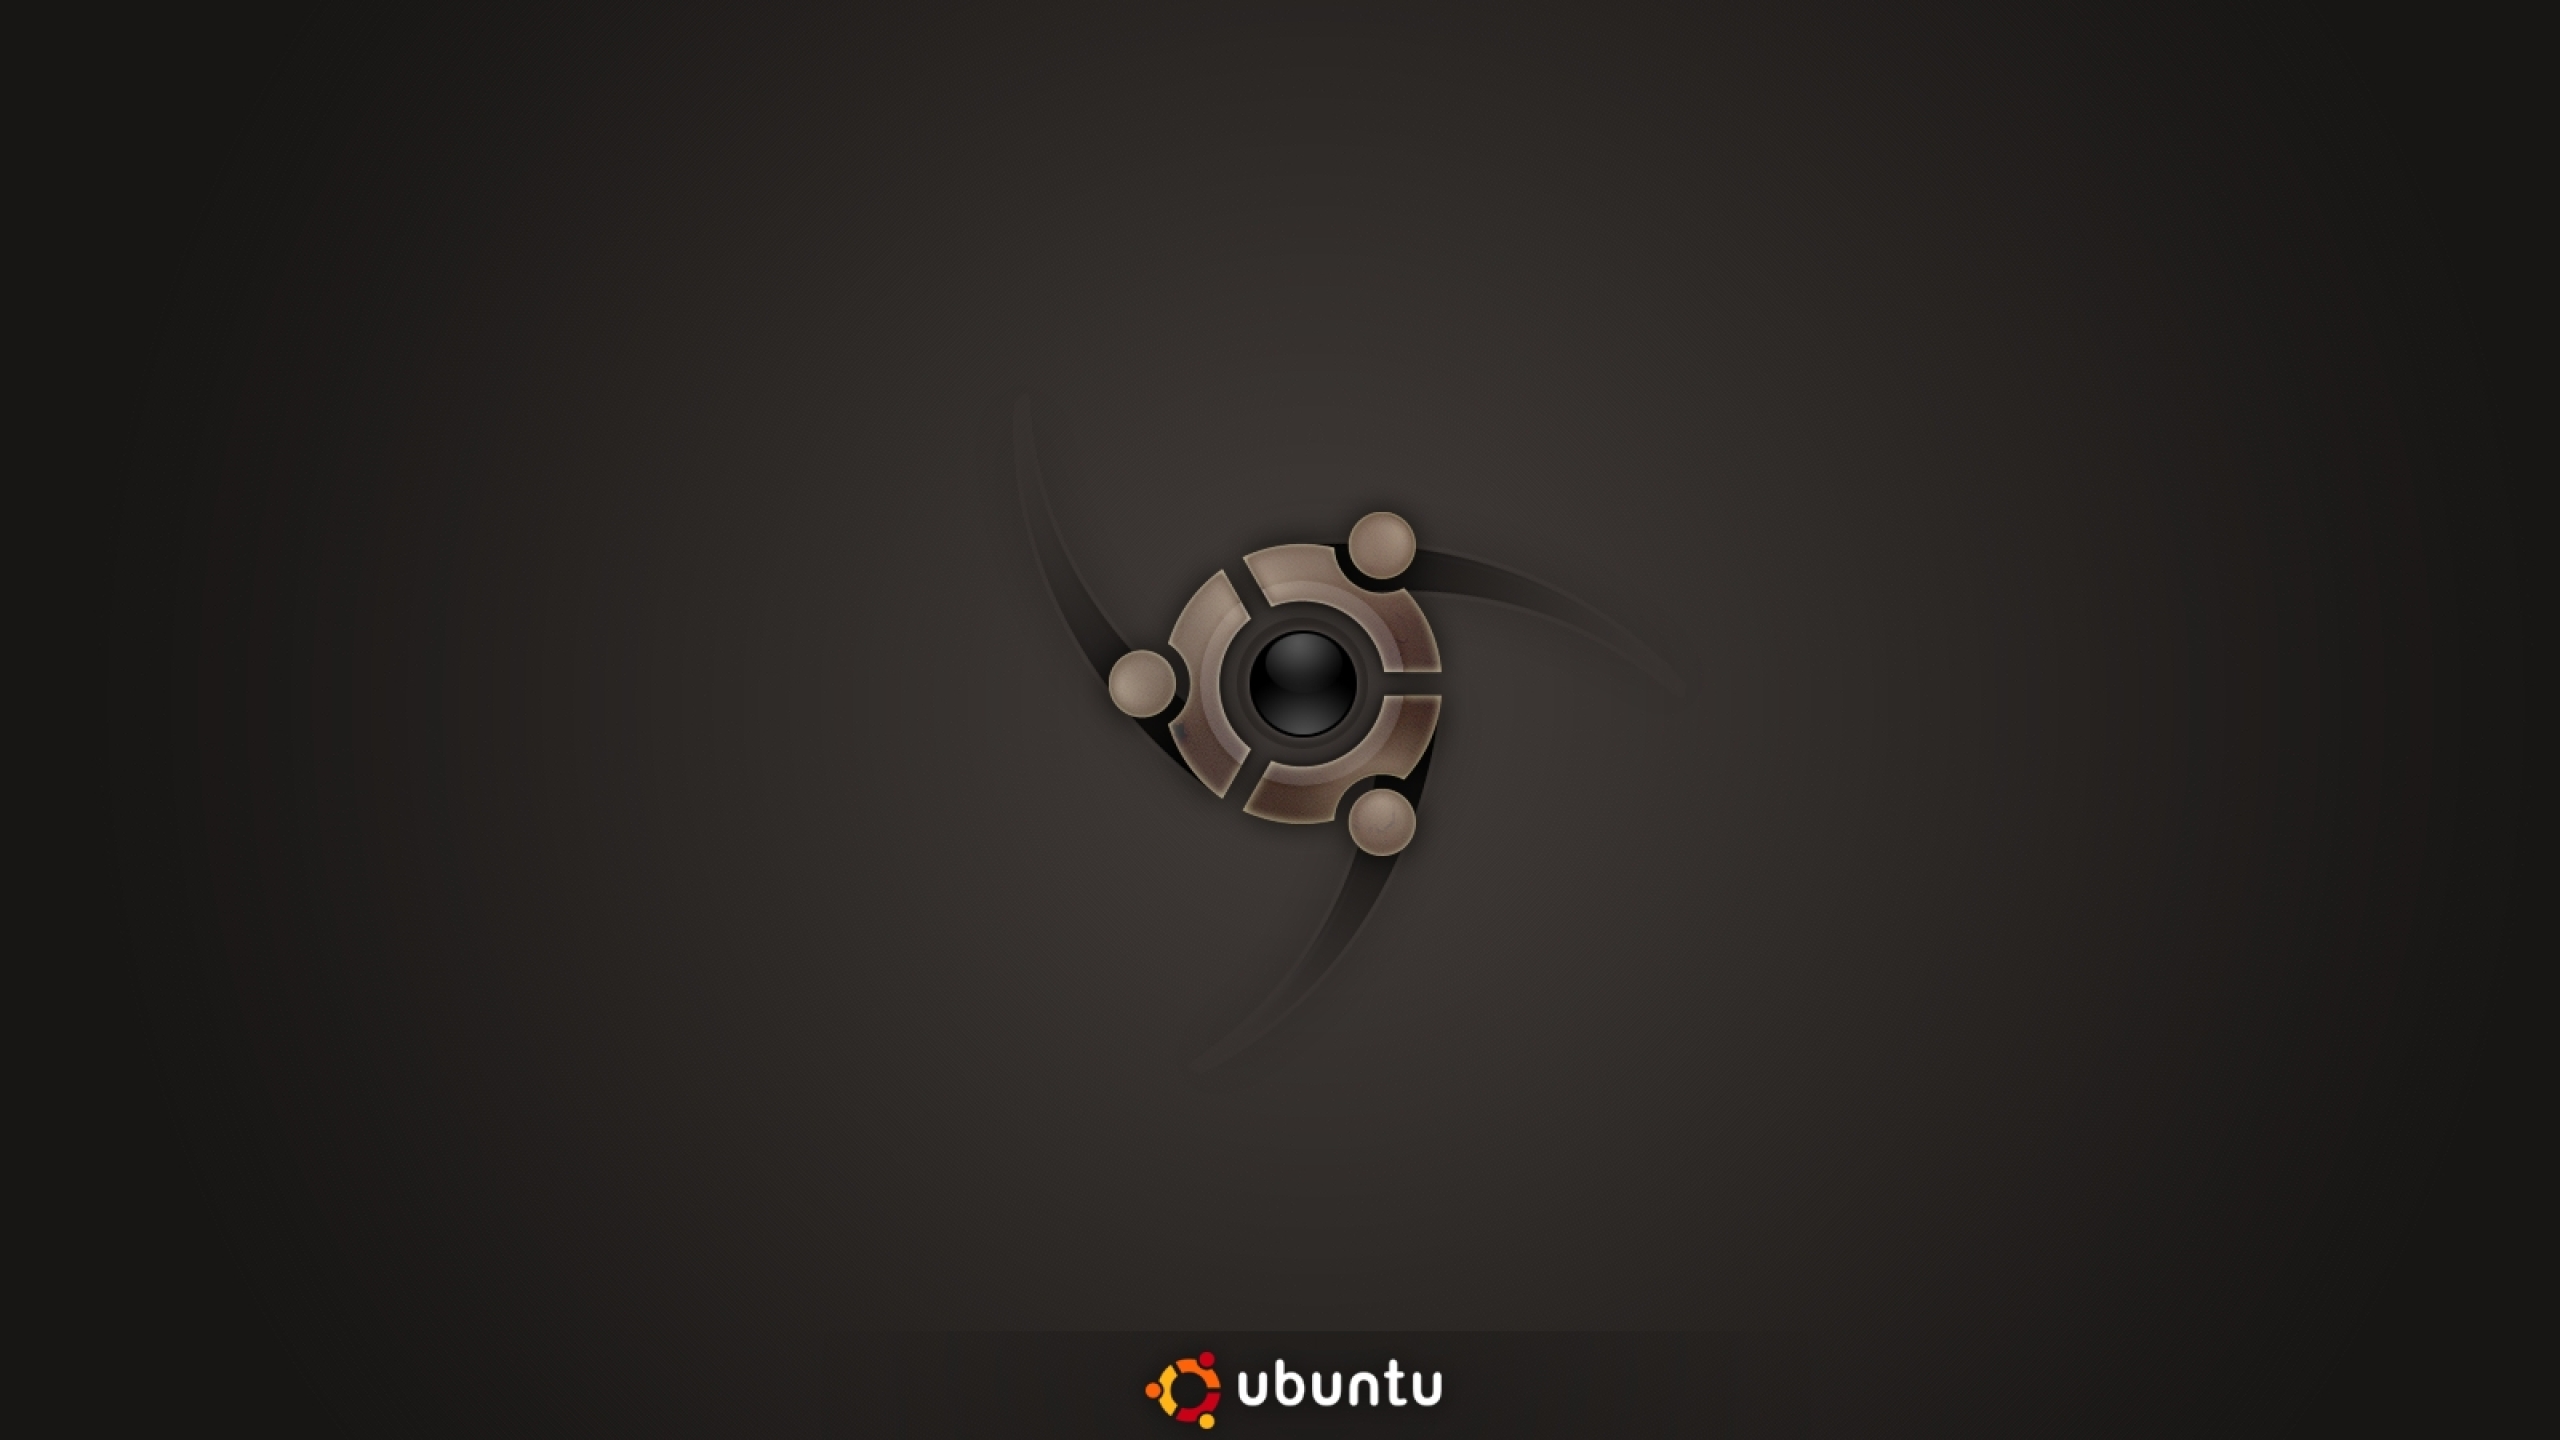 2560x1440 Ubuntu Linux Debian 1440p Resolution Wallpaper Hd Hi Tech 4k Wallpapers Images Photos And Background Wallpapers Den